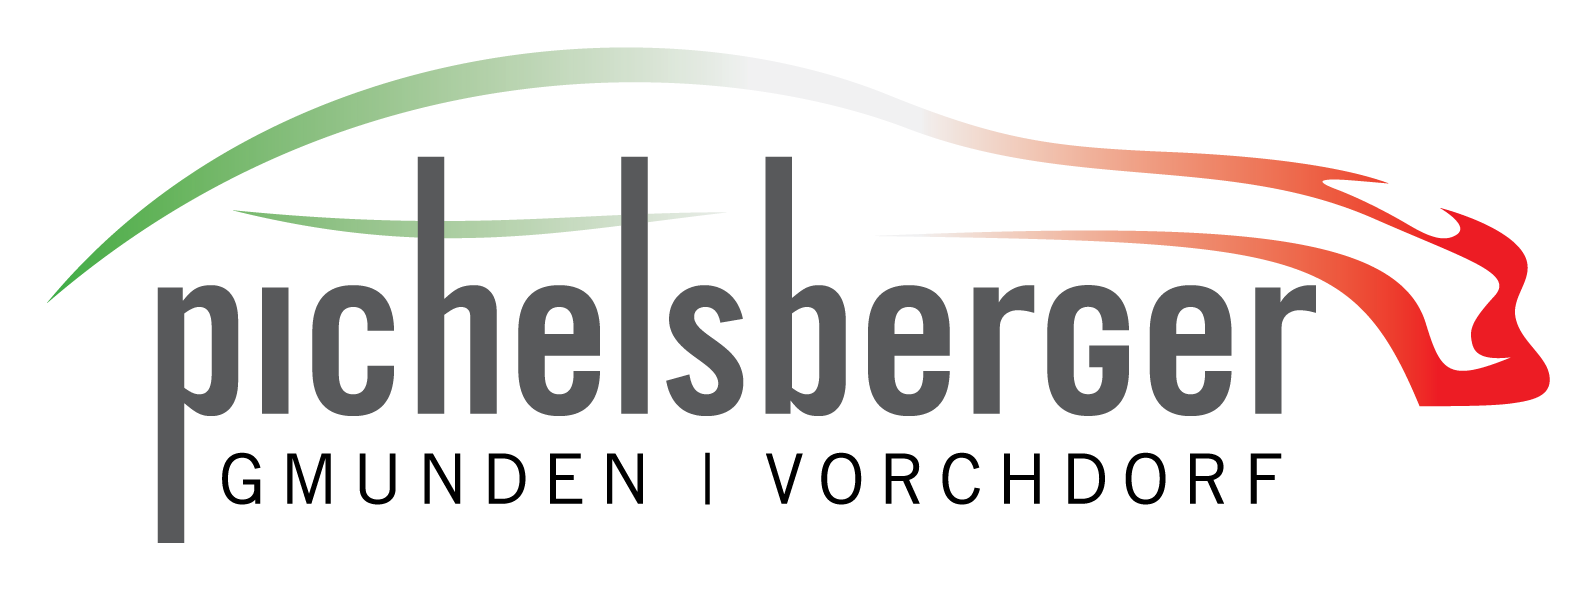 Pichelsberger GmbH